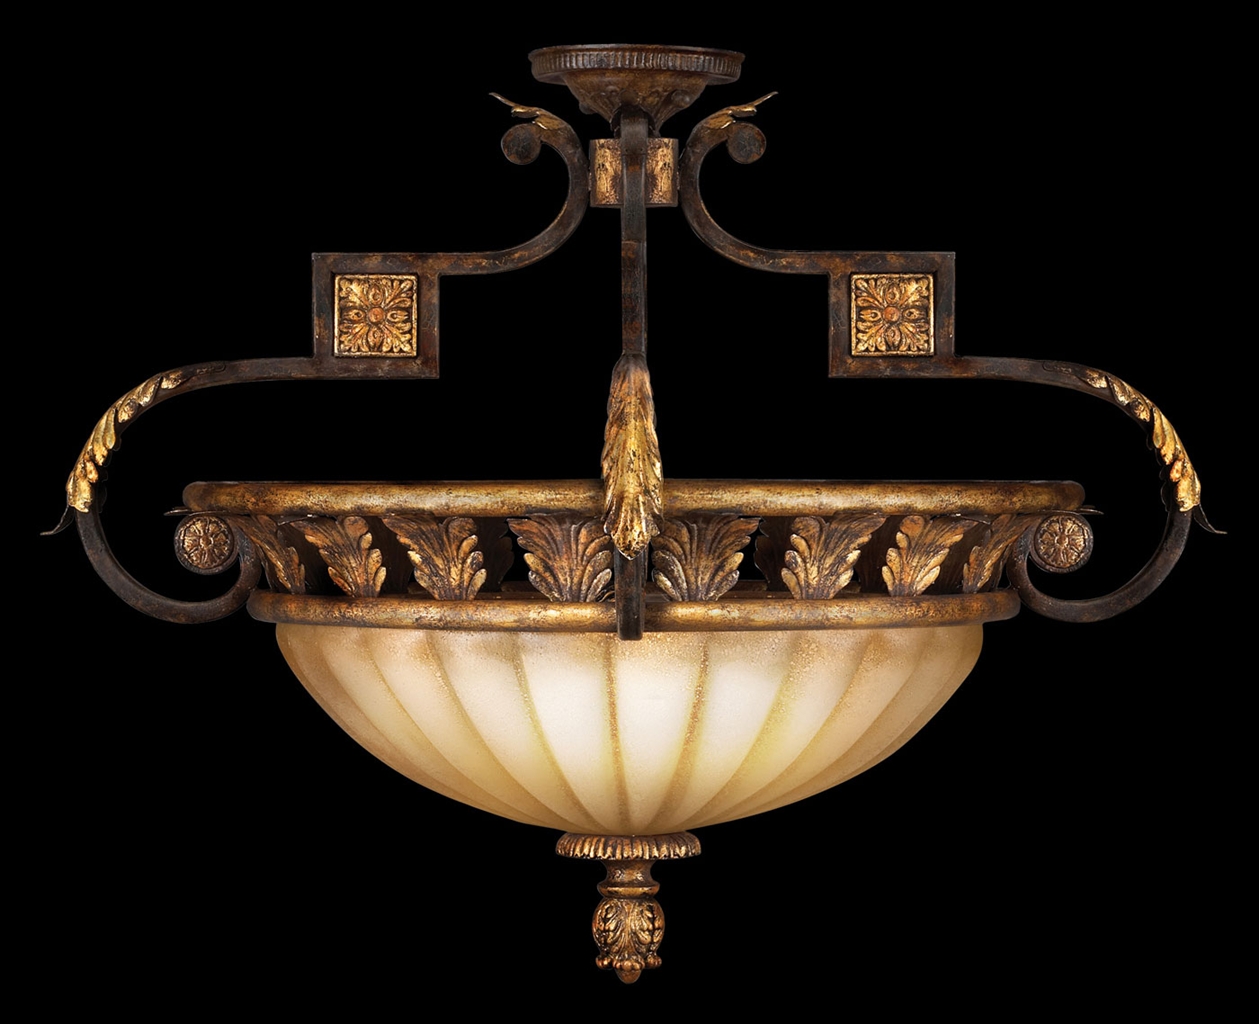 Lighting Semi-flush mount in antiqued gold leafed finish